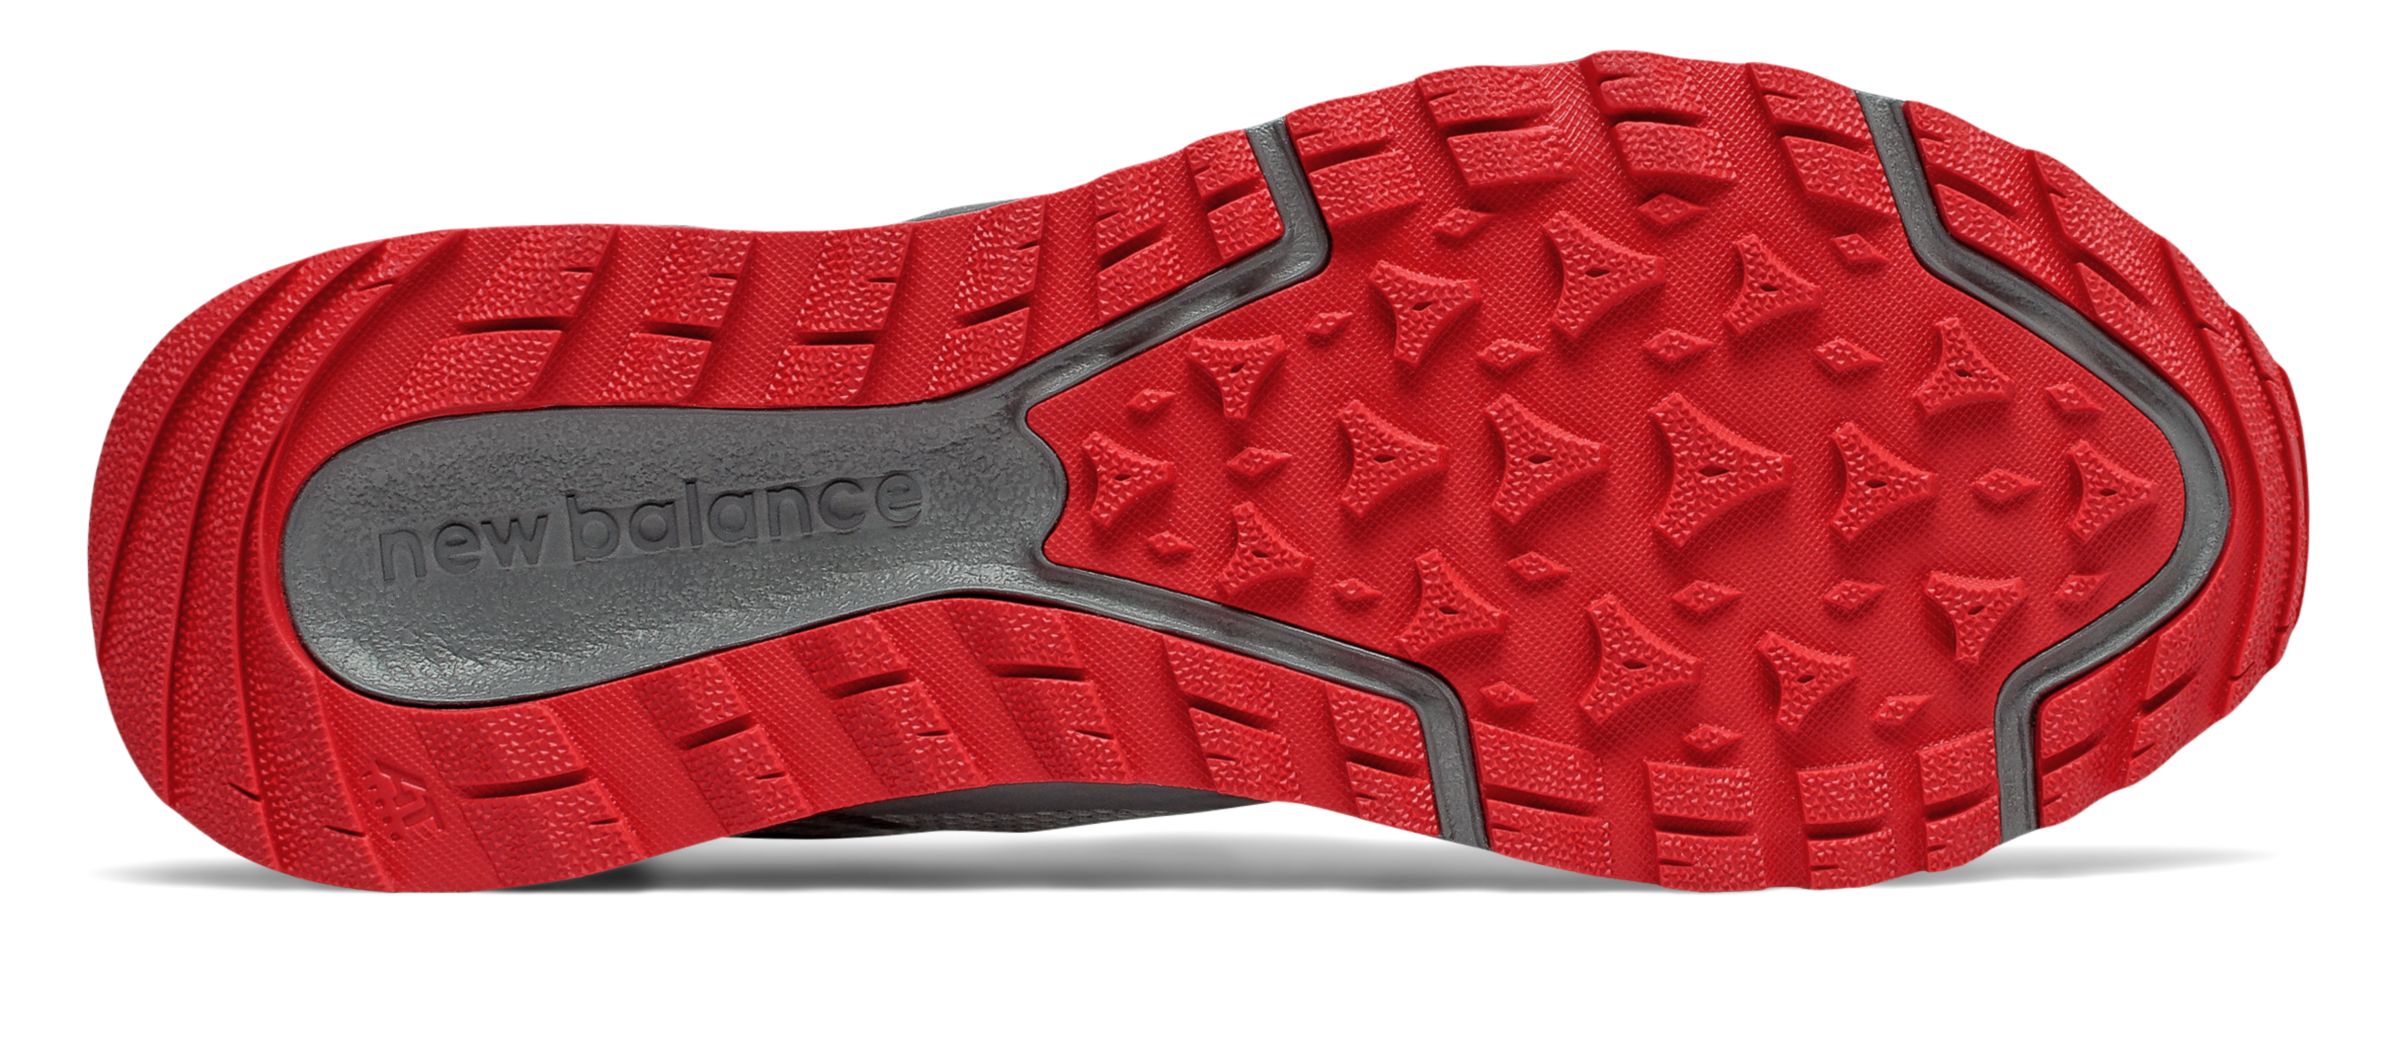 new balance 590v3 mens trail running shoes